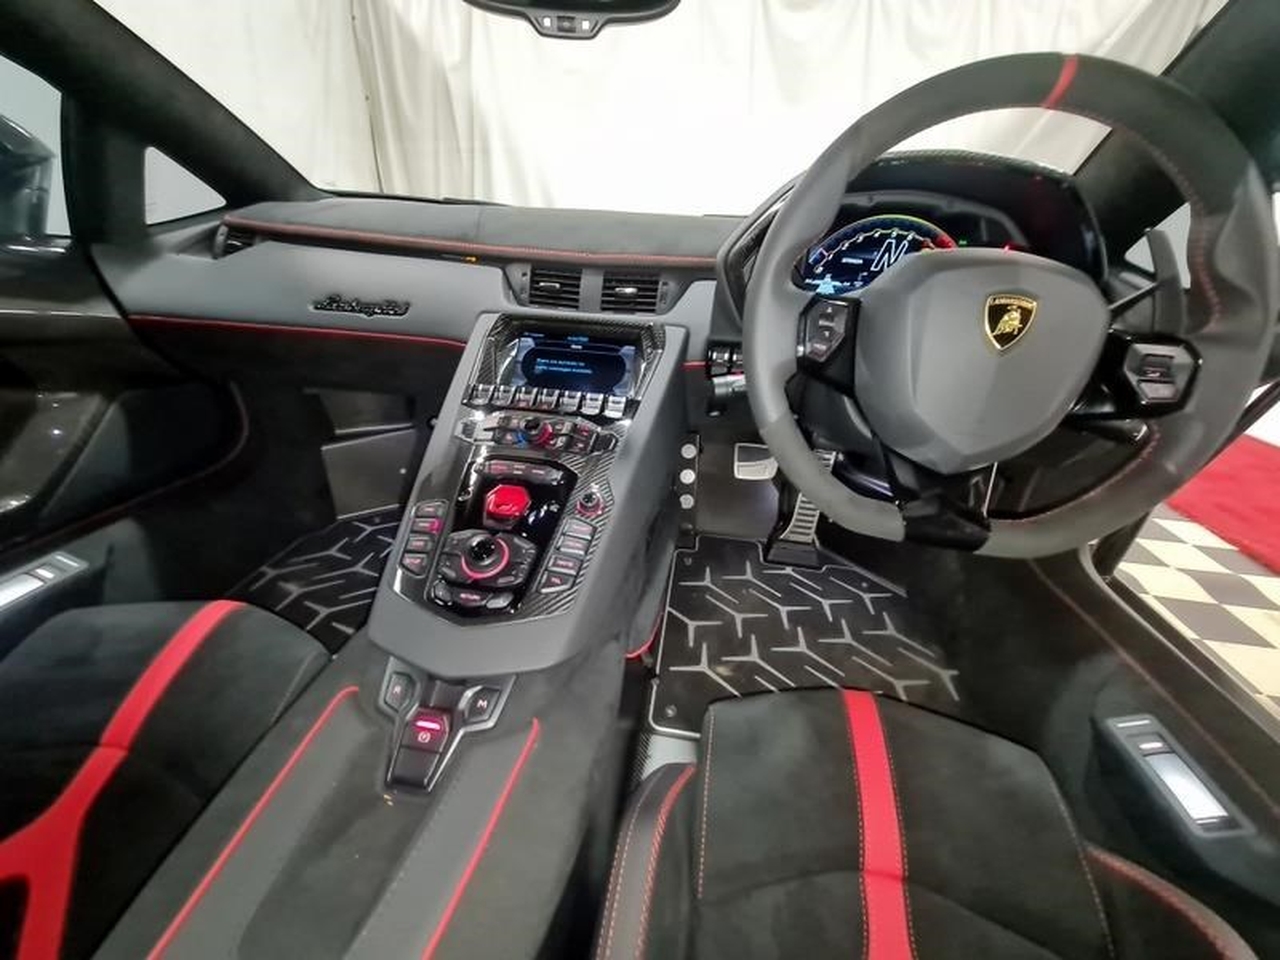 Lamborghini Aventador SVJ Roadster 2020 asta